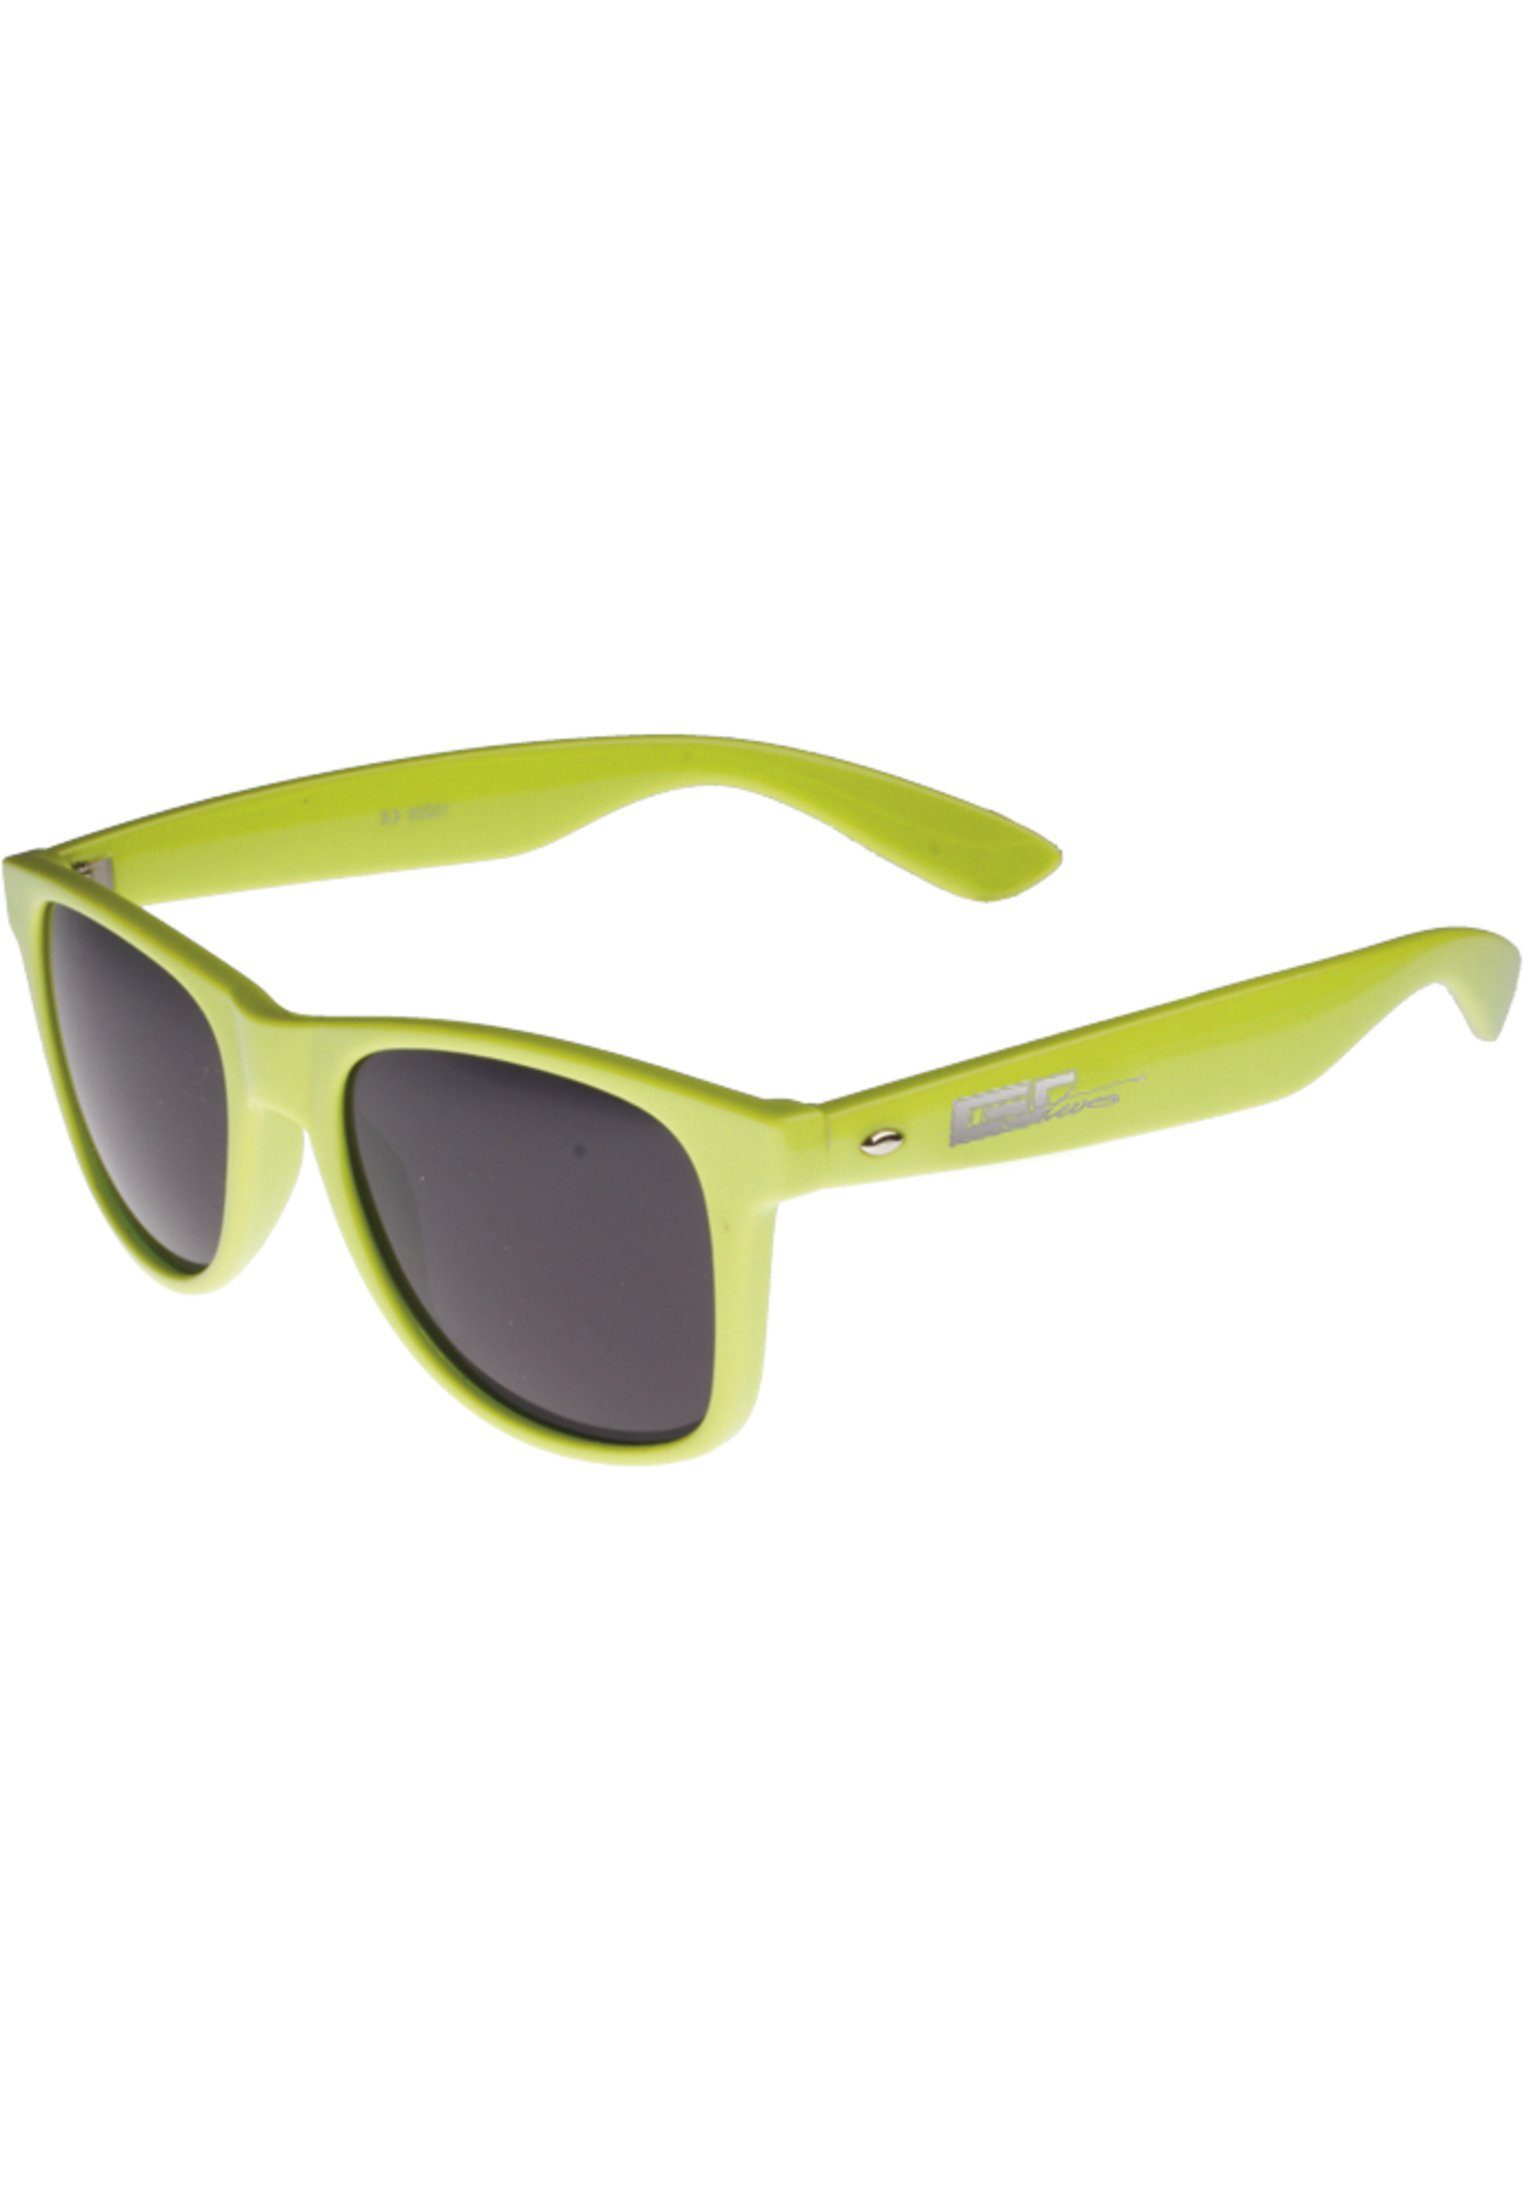 MSTRDS Sonnenbrille Accessoires Groove Shades GStwo neongreen | Sonnenbrillen